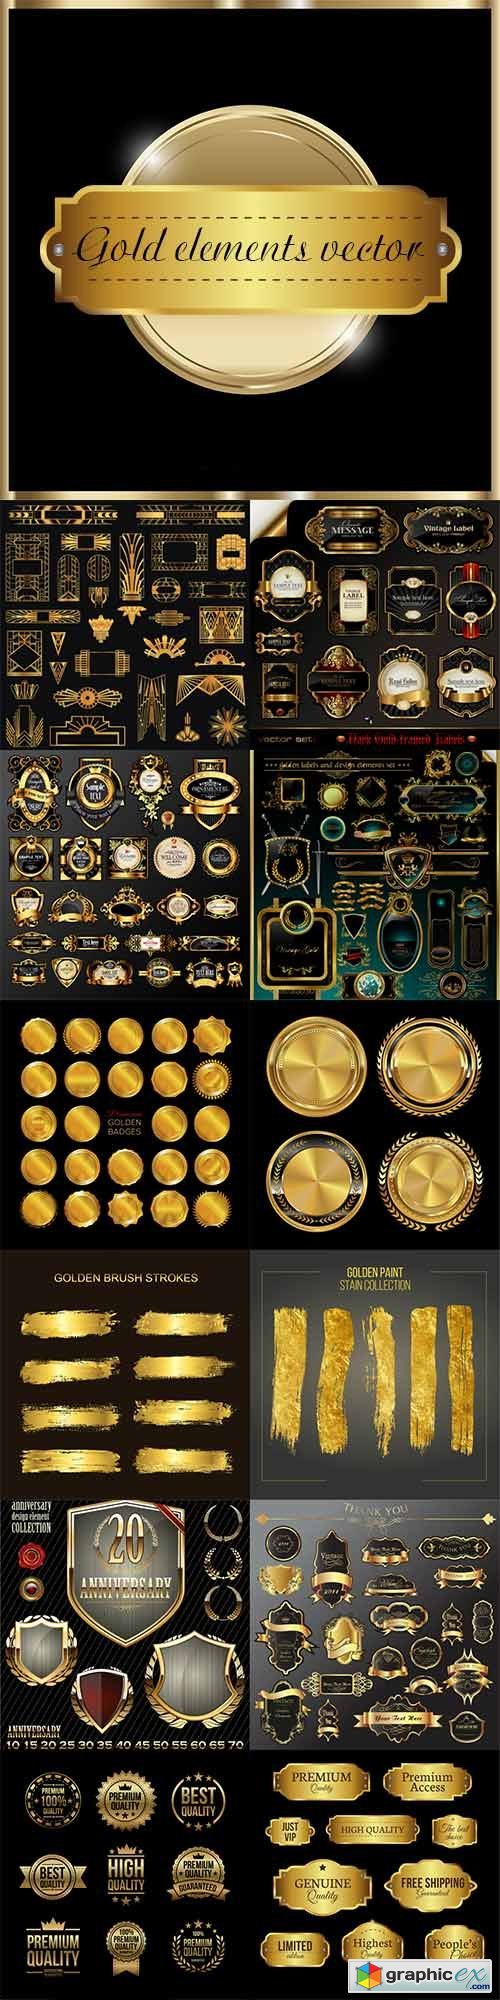 Various gold elements